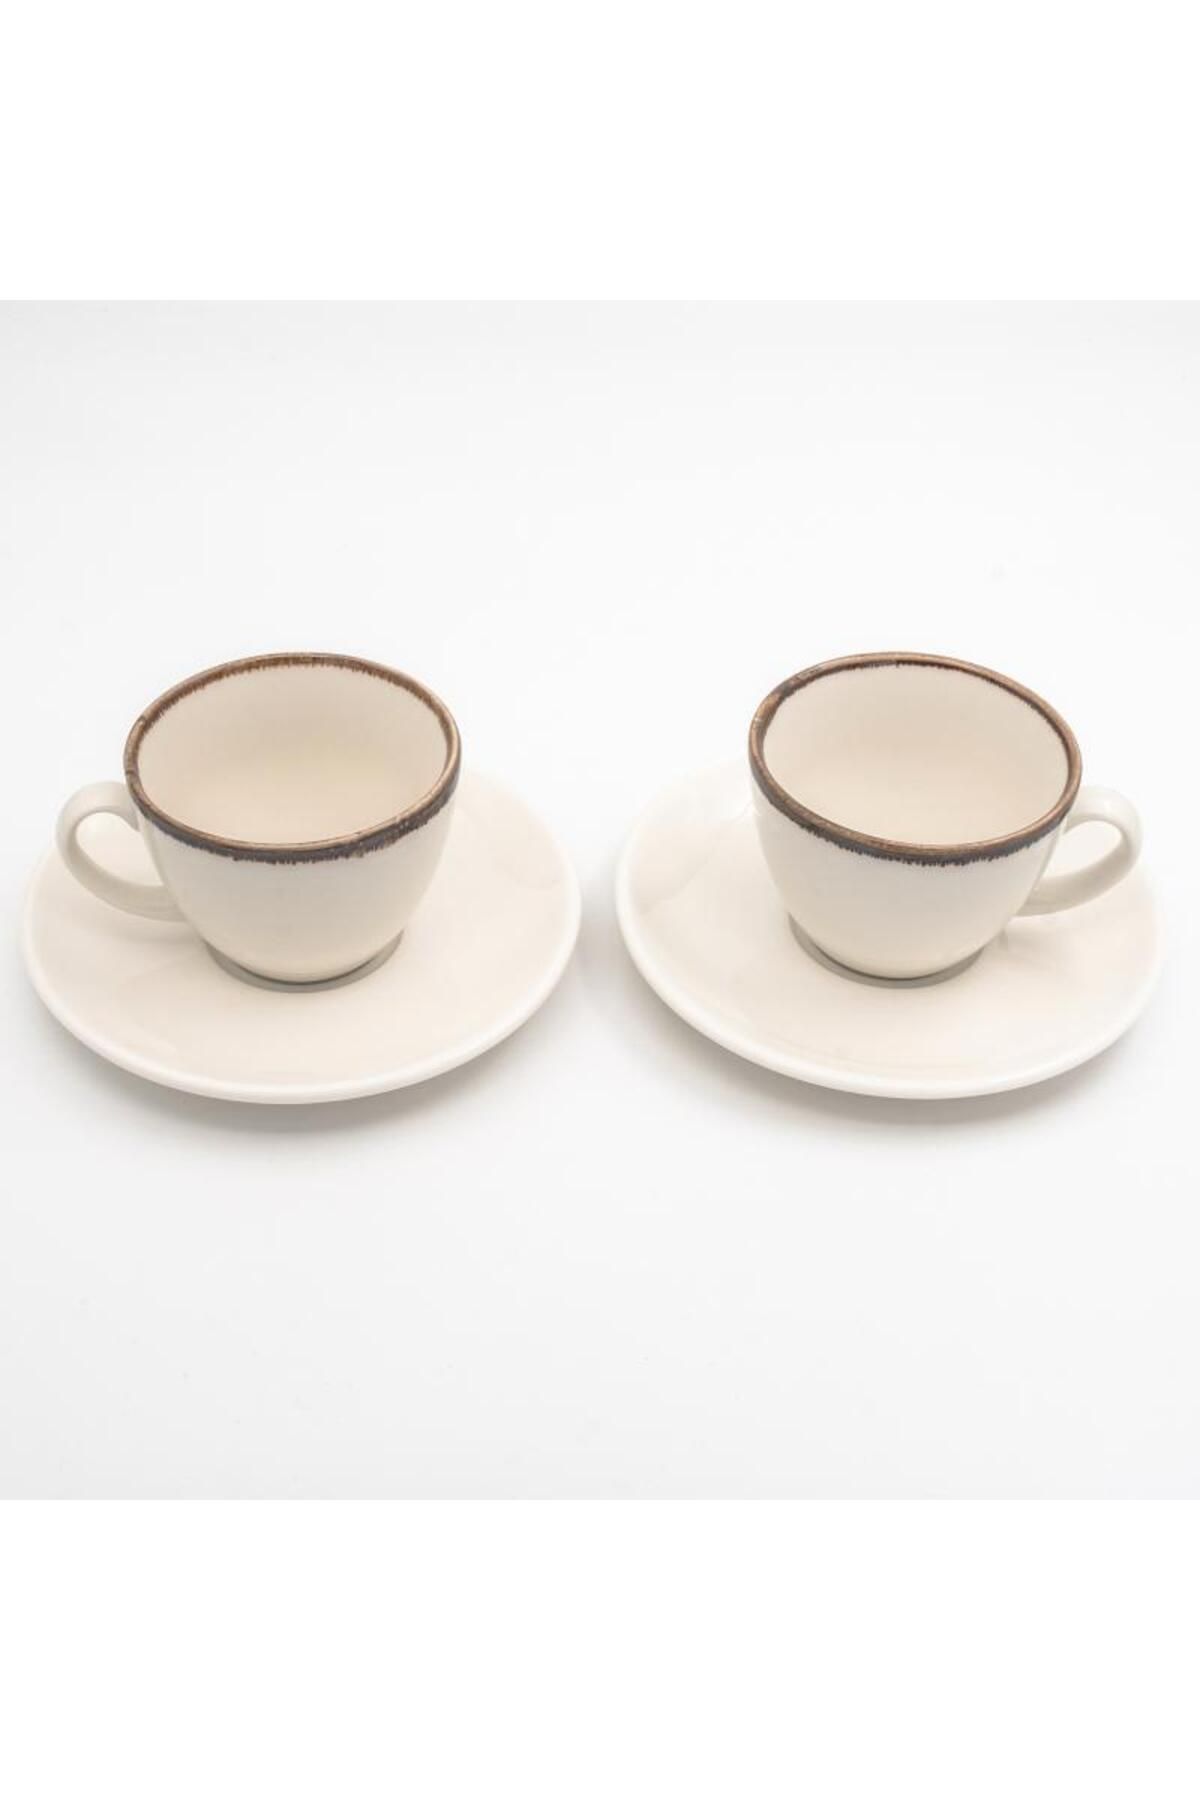 Bonna Porselen Bonna Premium Porcelain 2’li Fincan Takımı 230cc